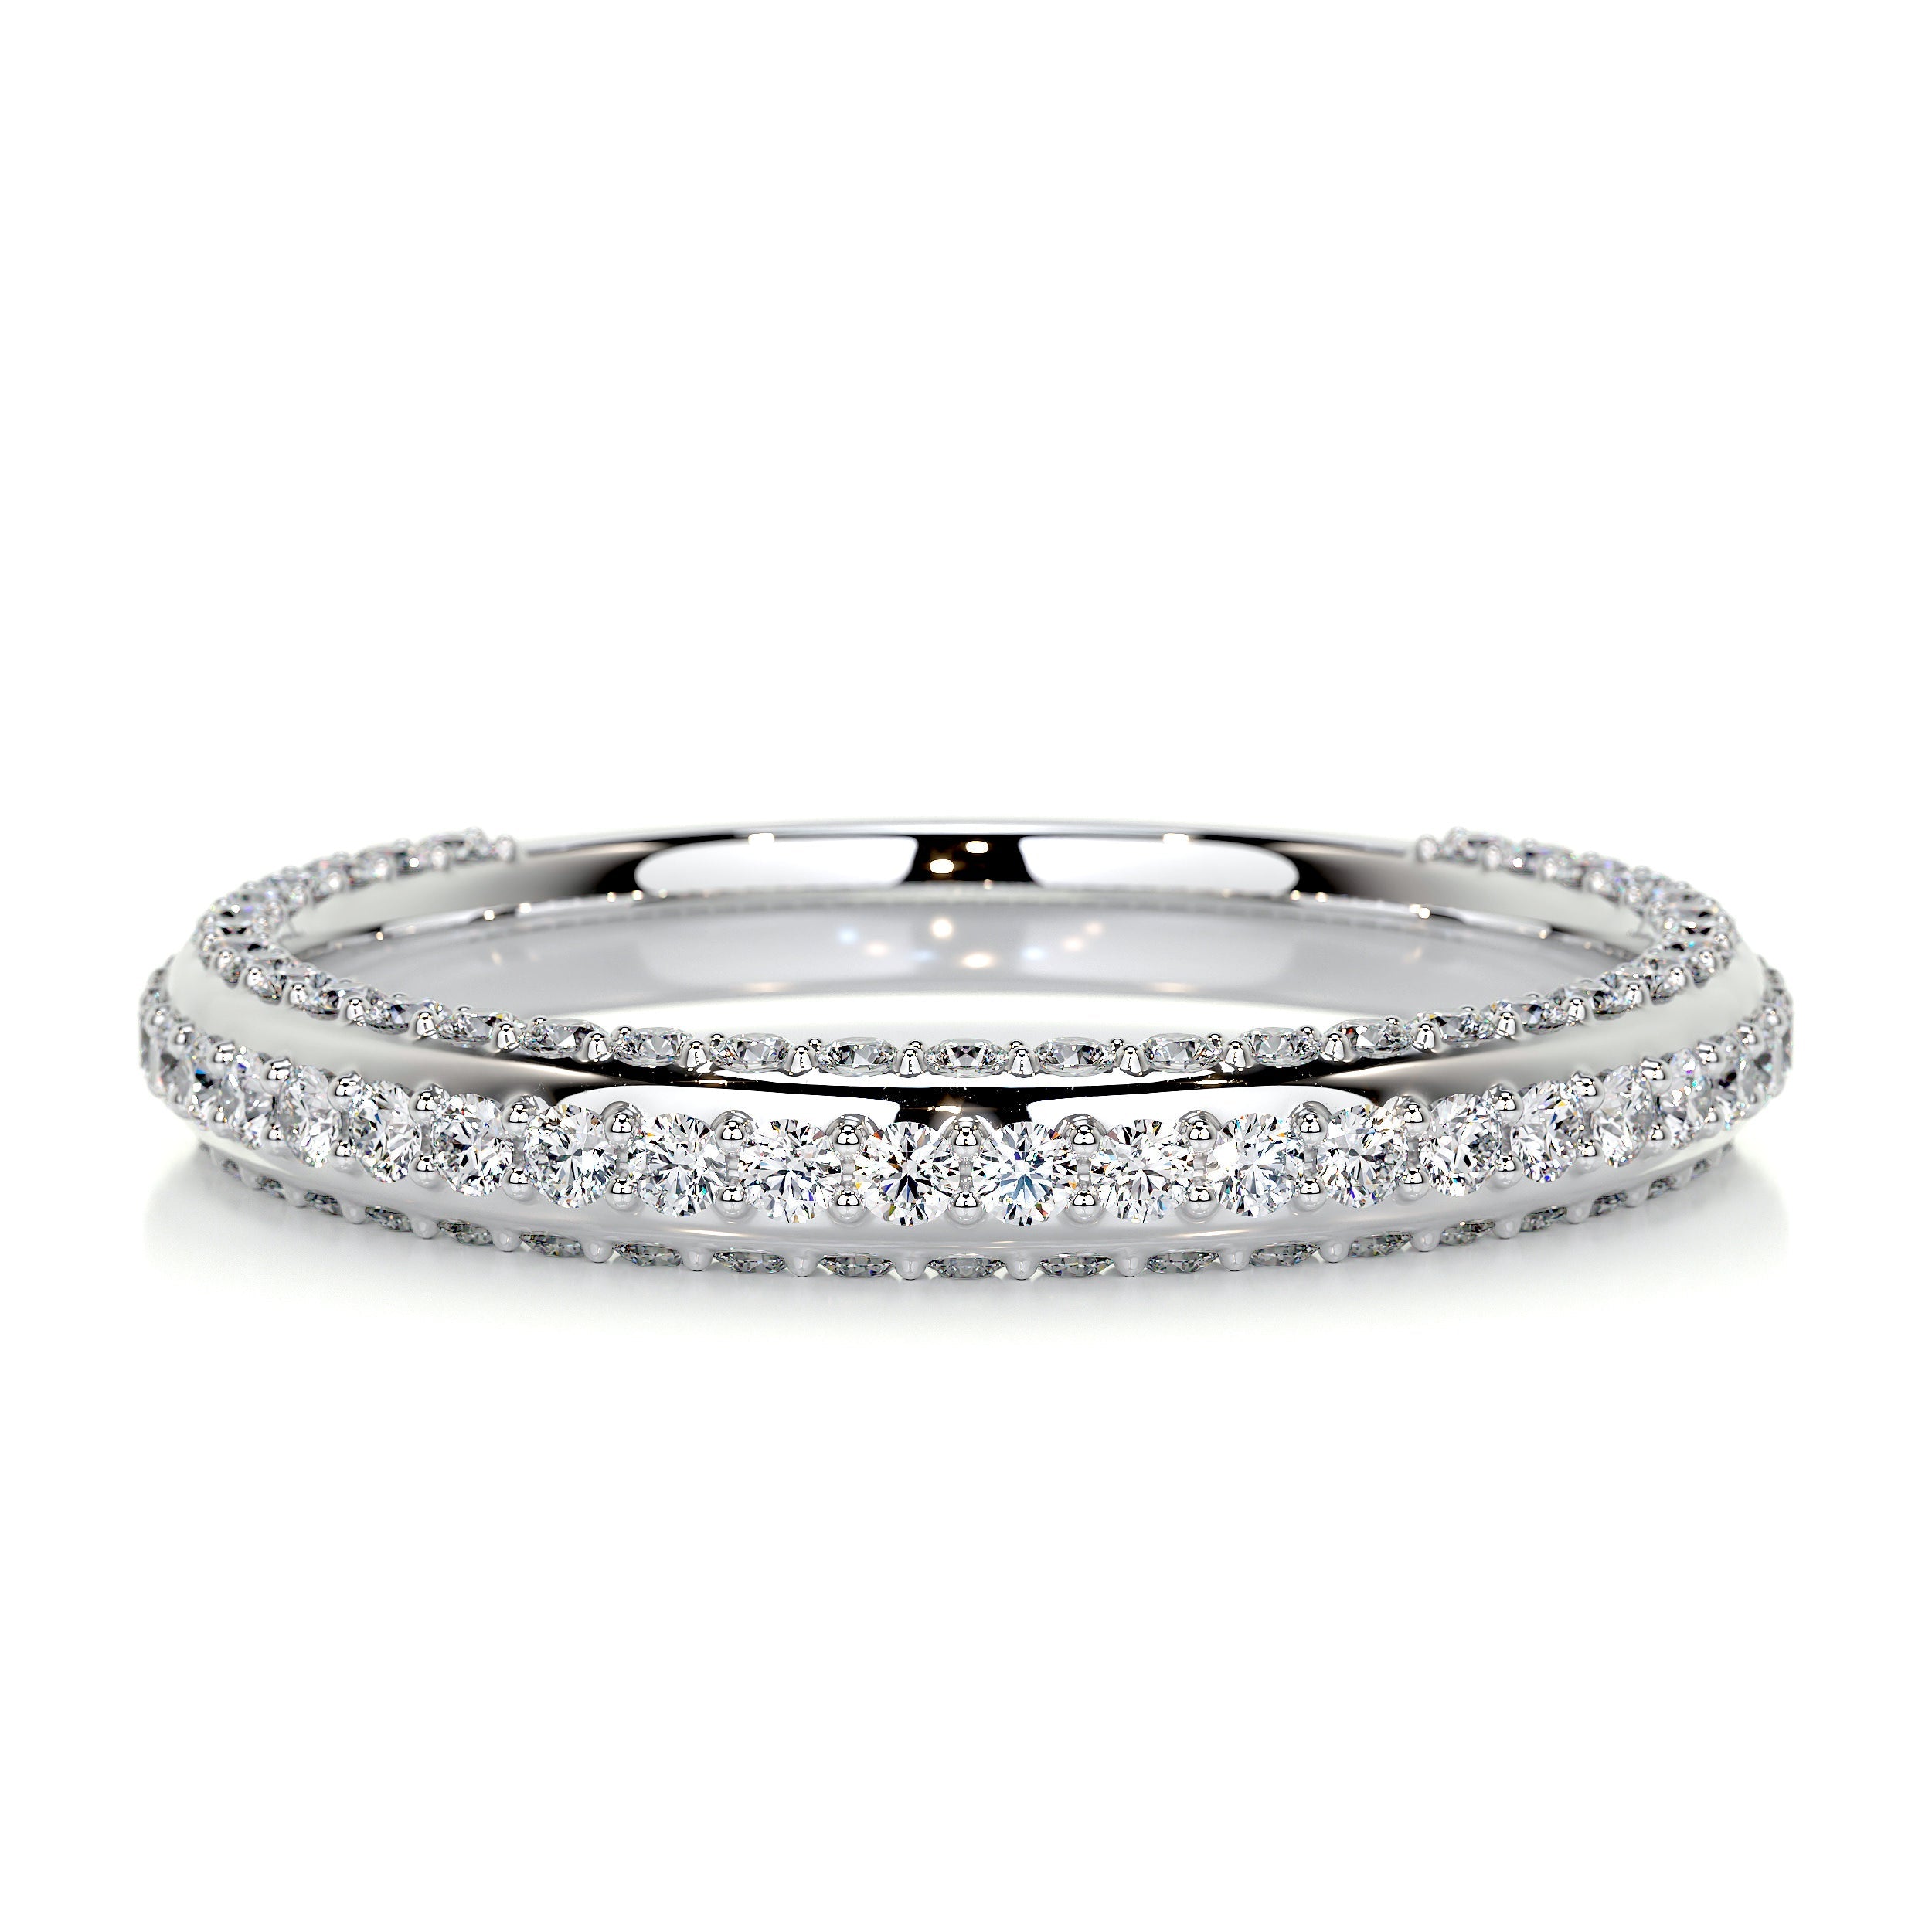 Anastasia Diamond Wedding Ring   (0.75 Carat) -18K White Gold (RTS)